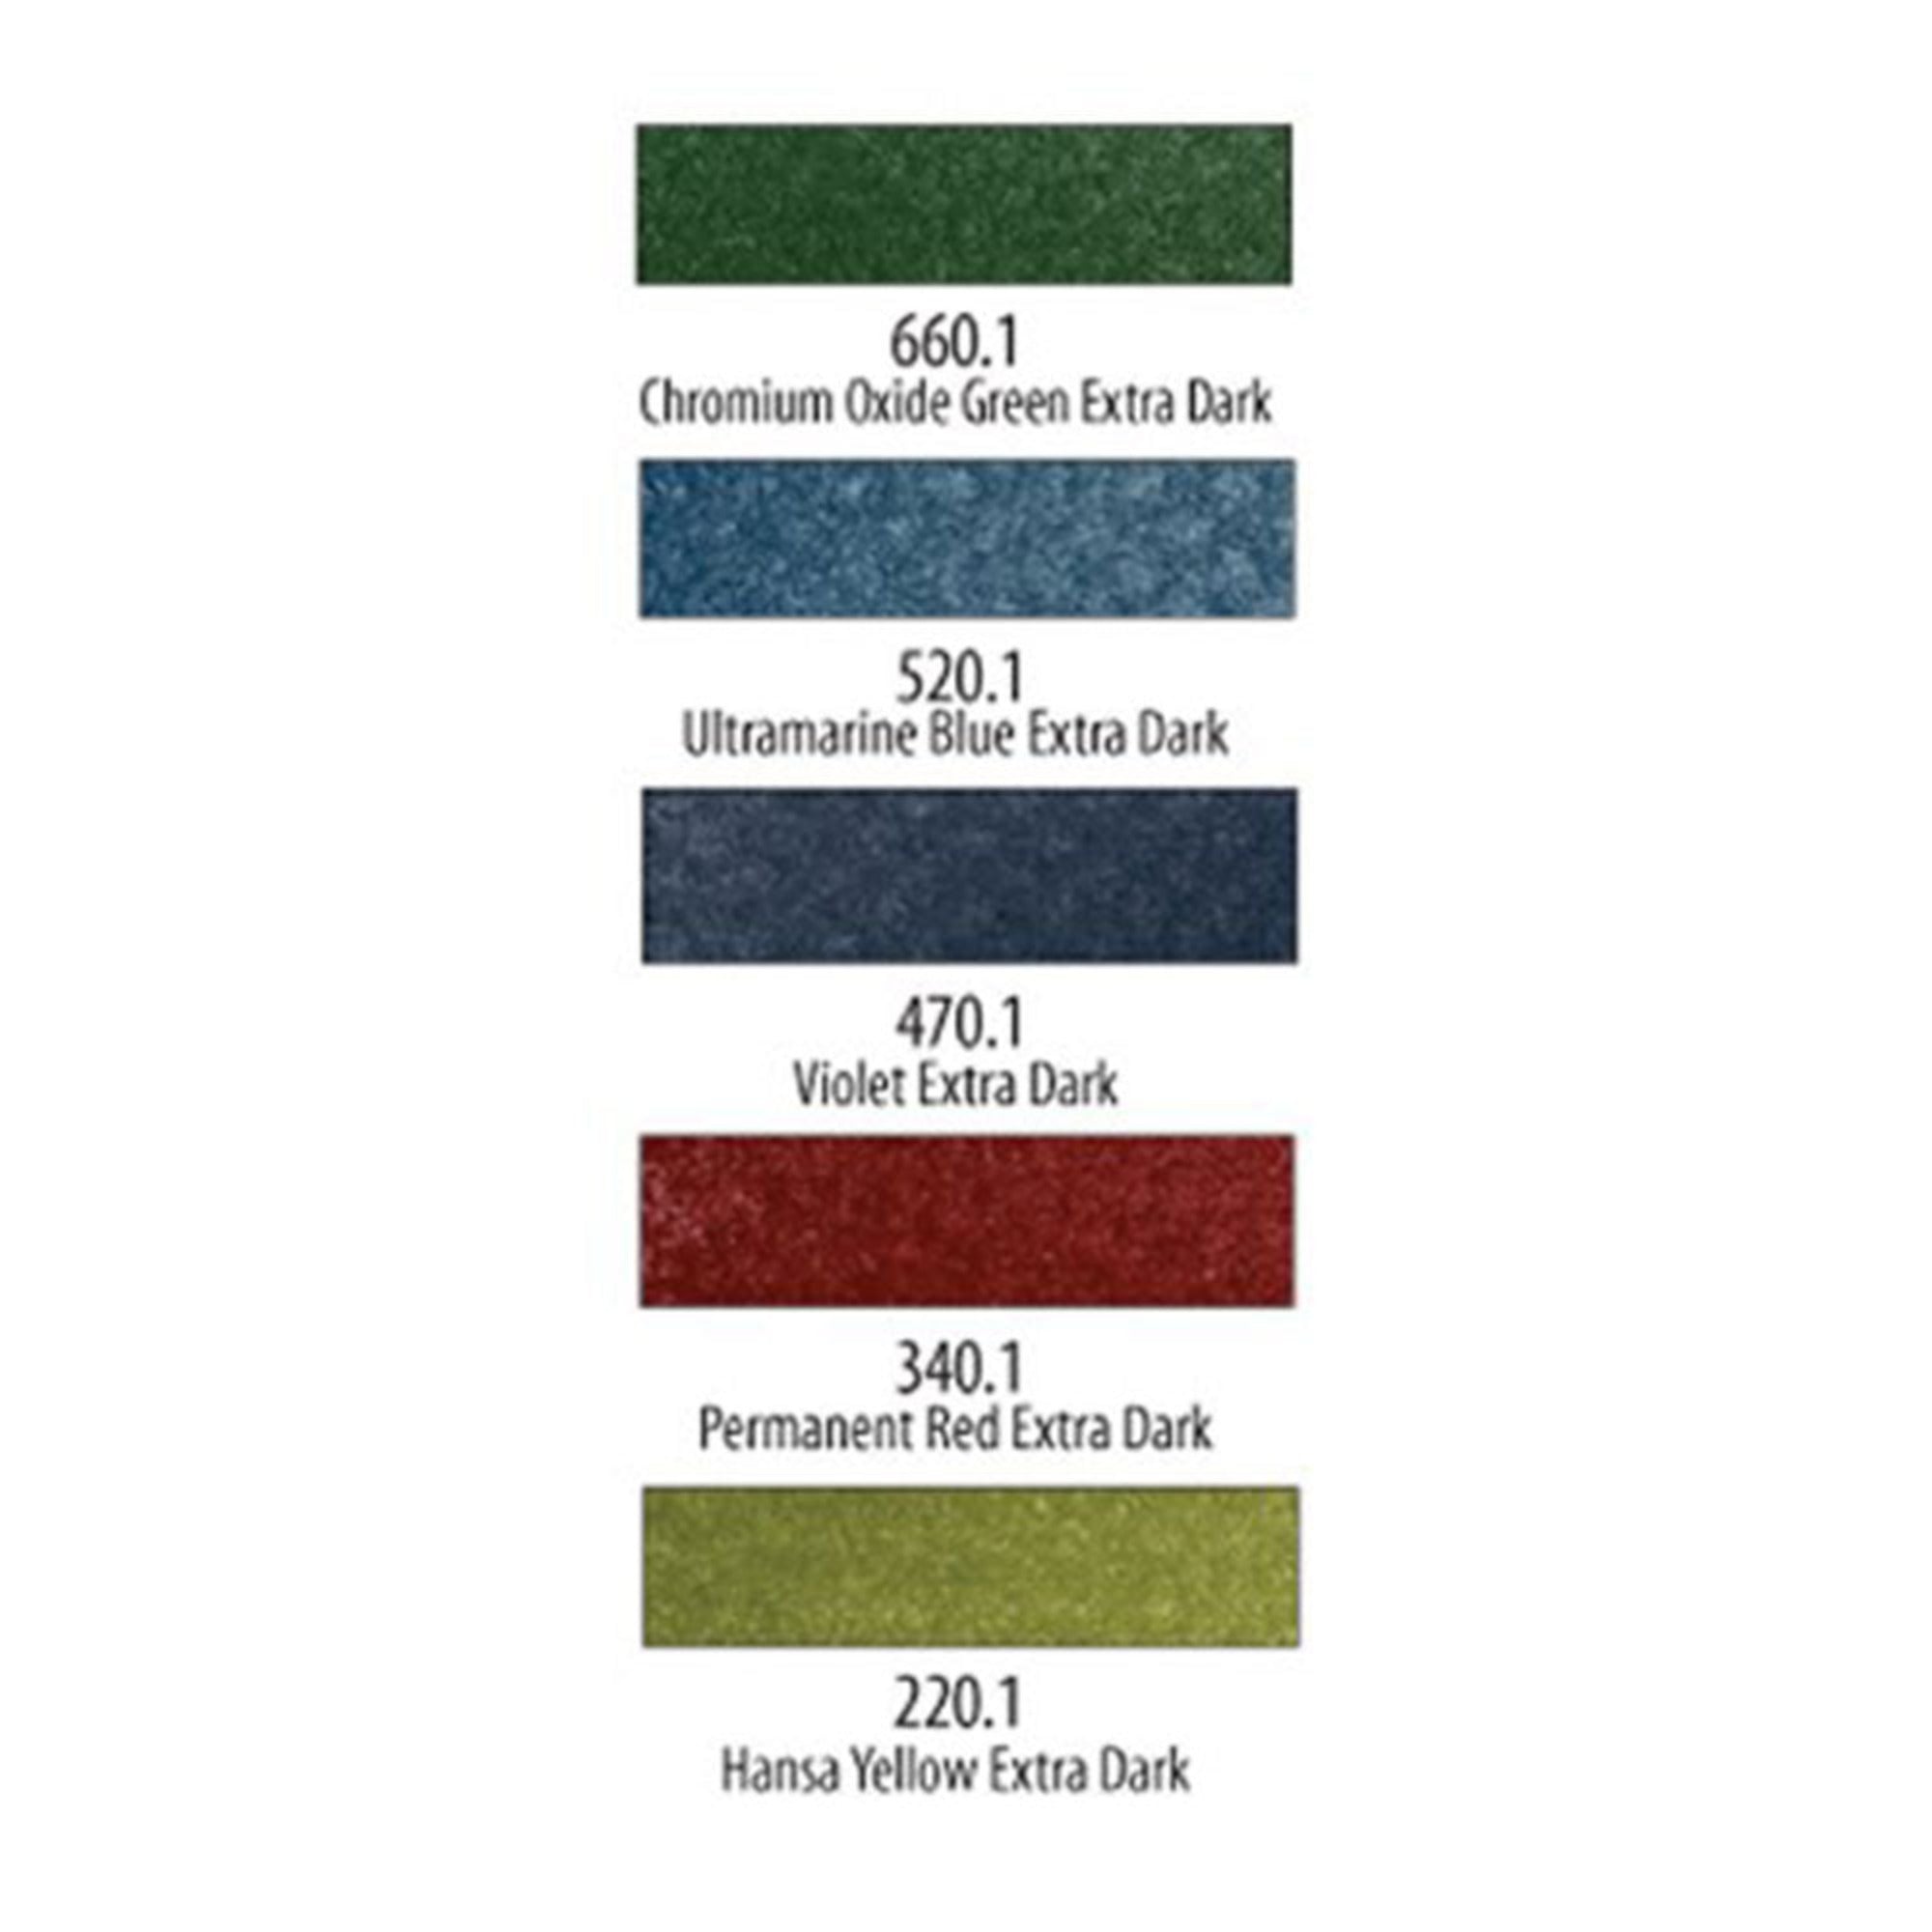 Pan Pastel Starter Set EXTRA DARK - Set of 5 Colour Swatches